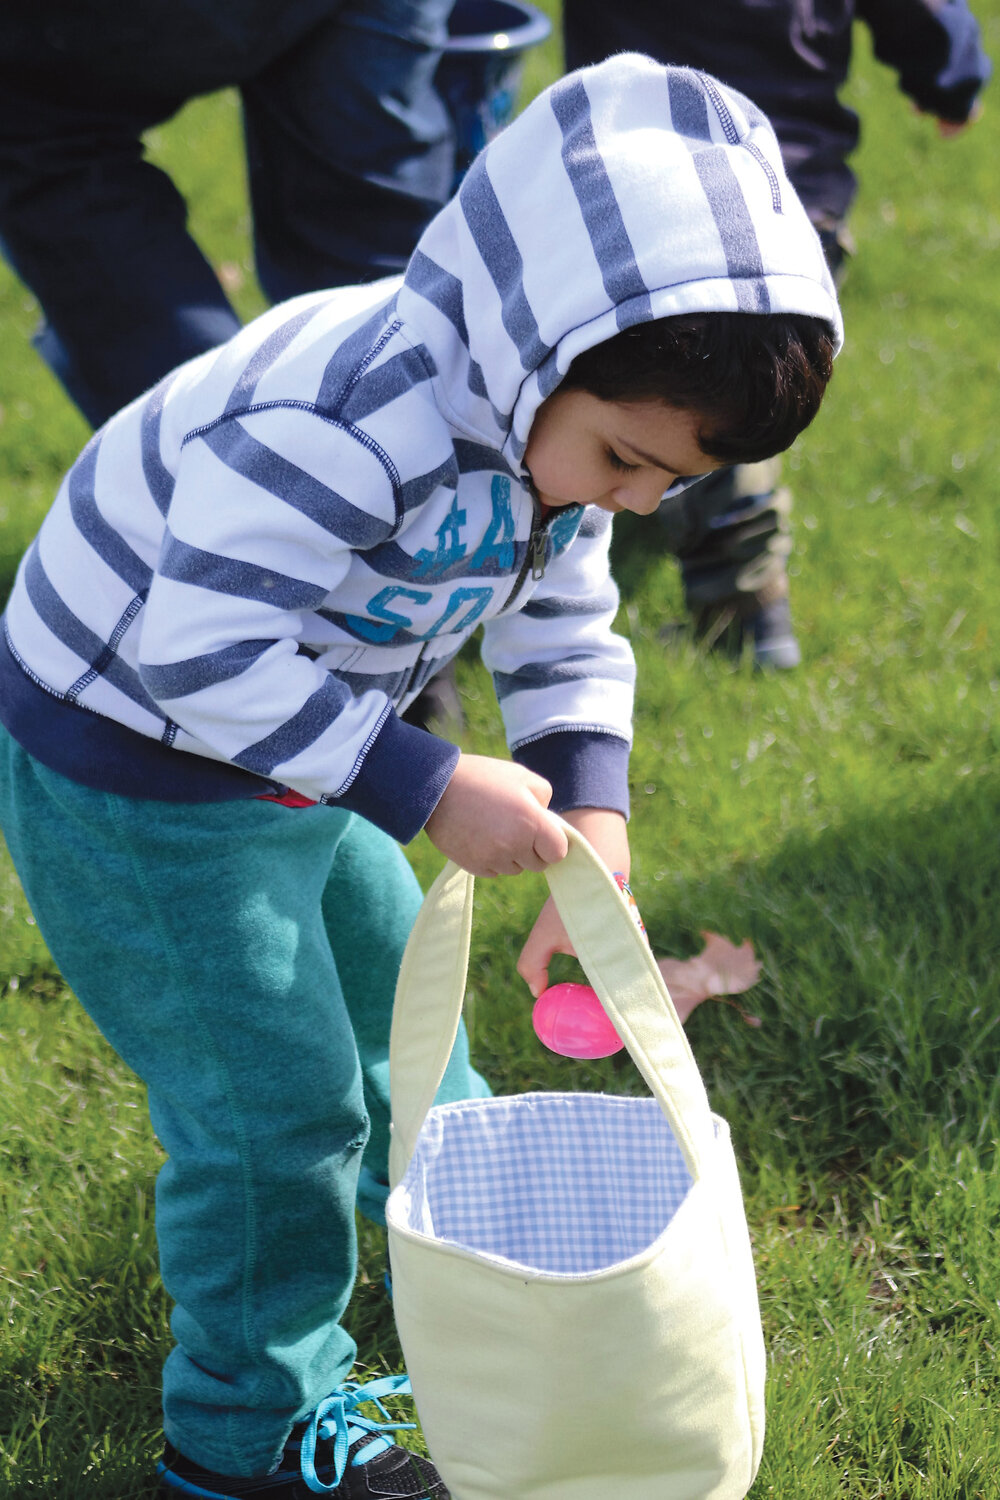 Enrique Sanchez, 3, drops an egg into his bag at the Brewster playfield.